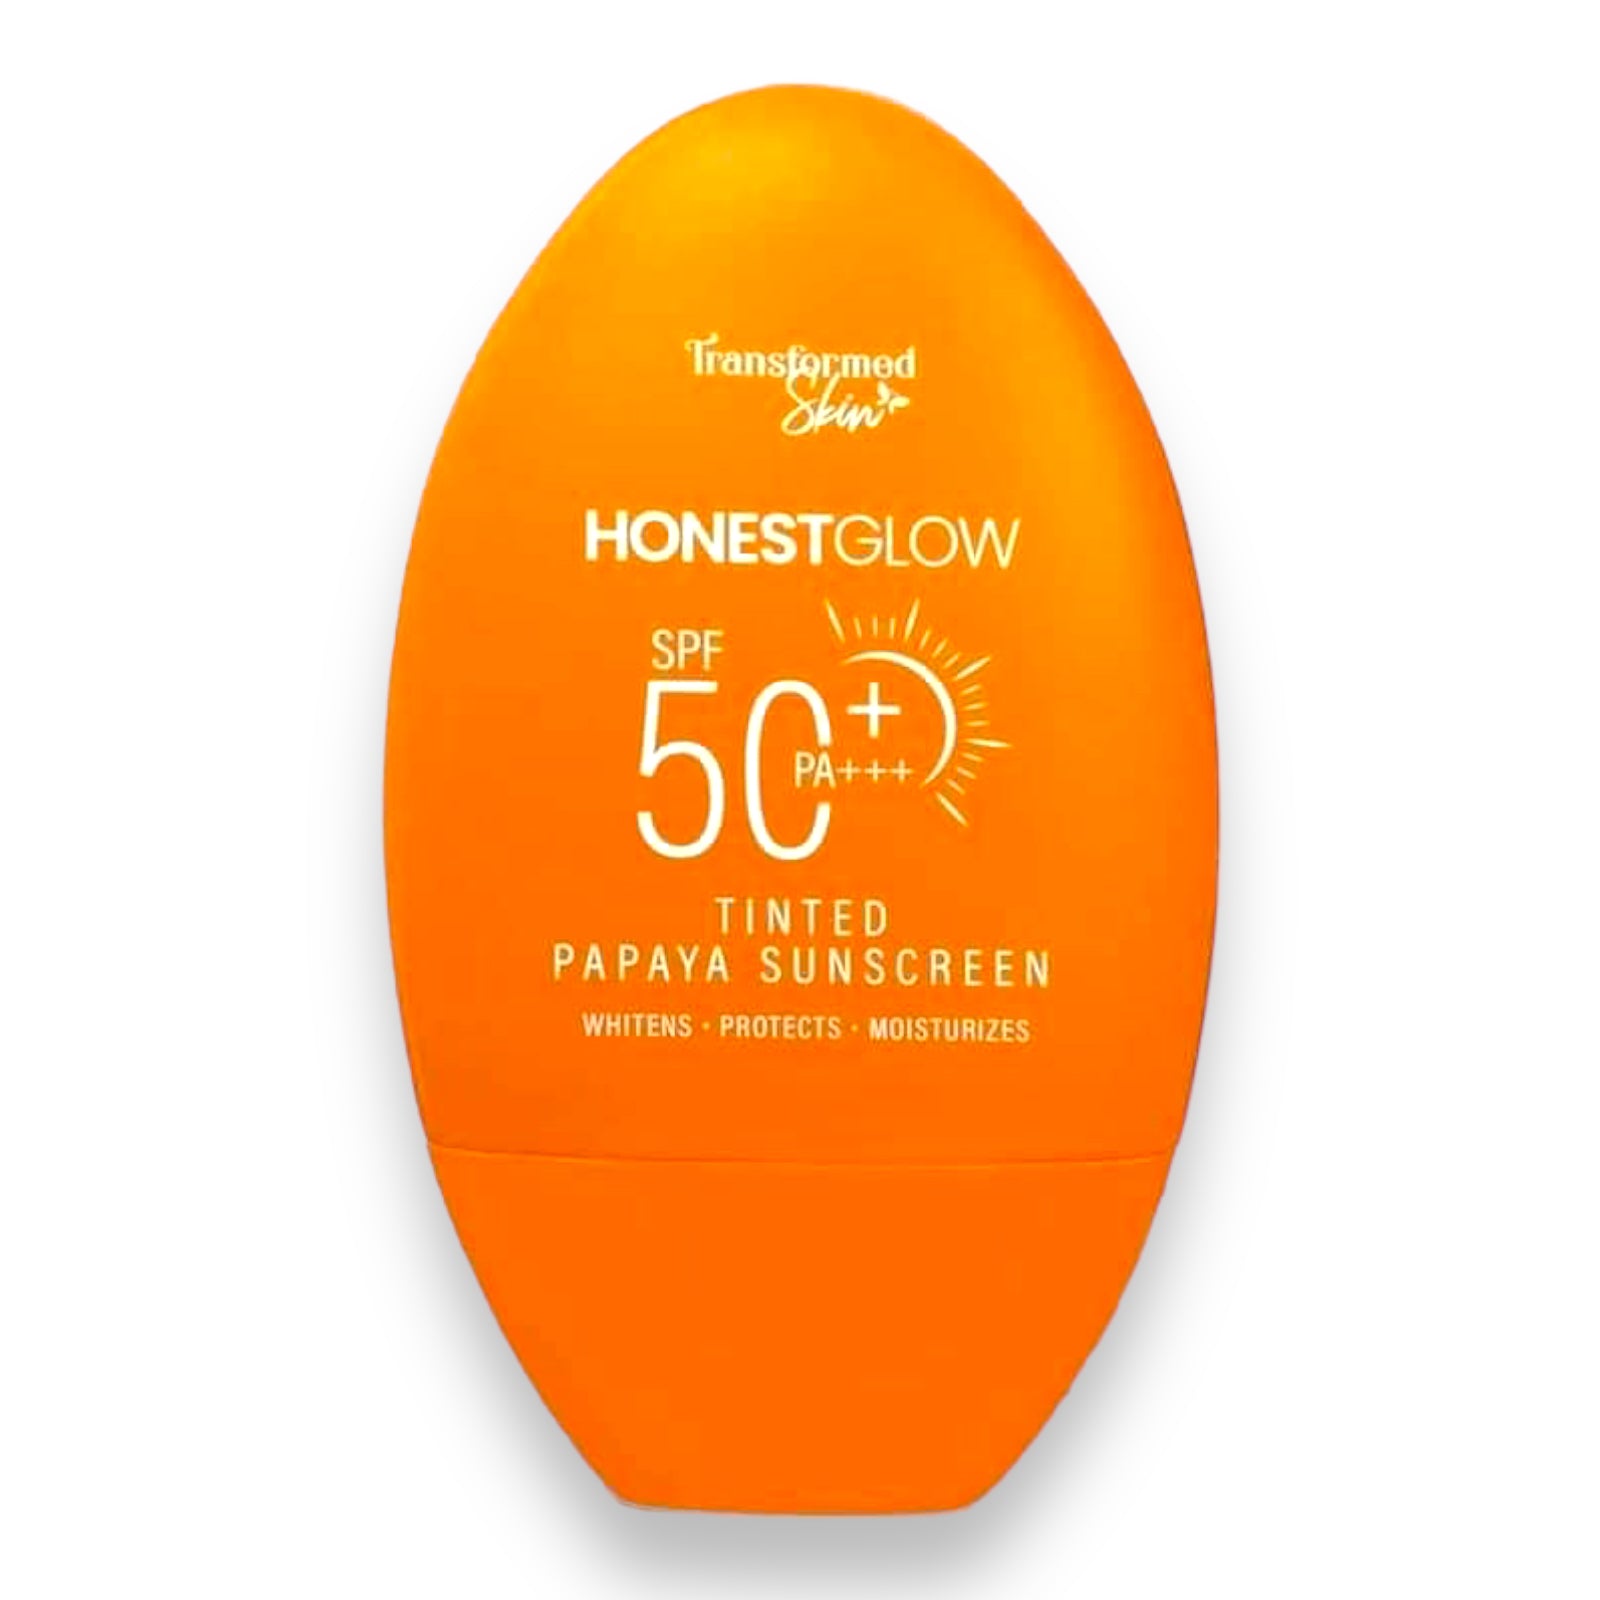 Transformed Skin -  Honest Glow Tinted Papaya Sunscreen SPF 50 PA+++, 50g